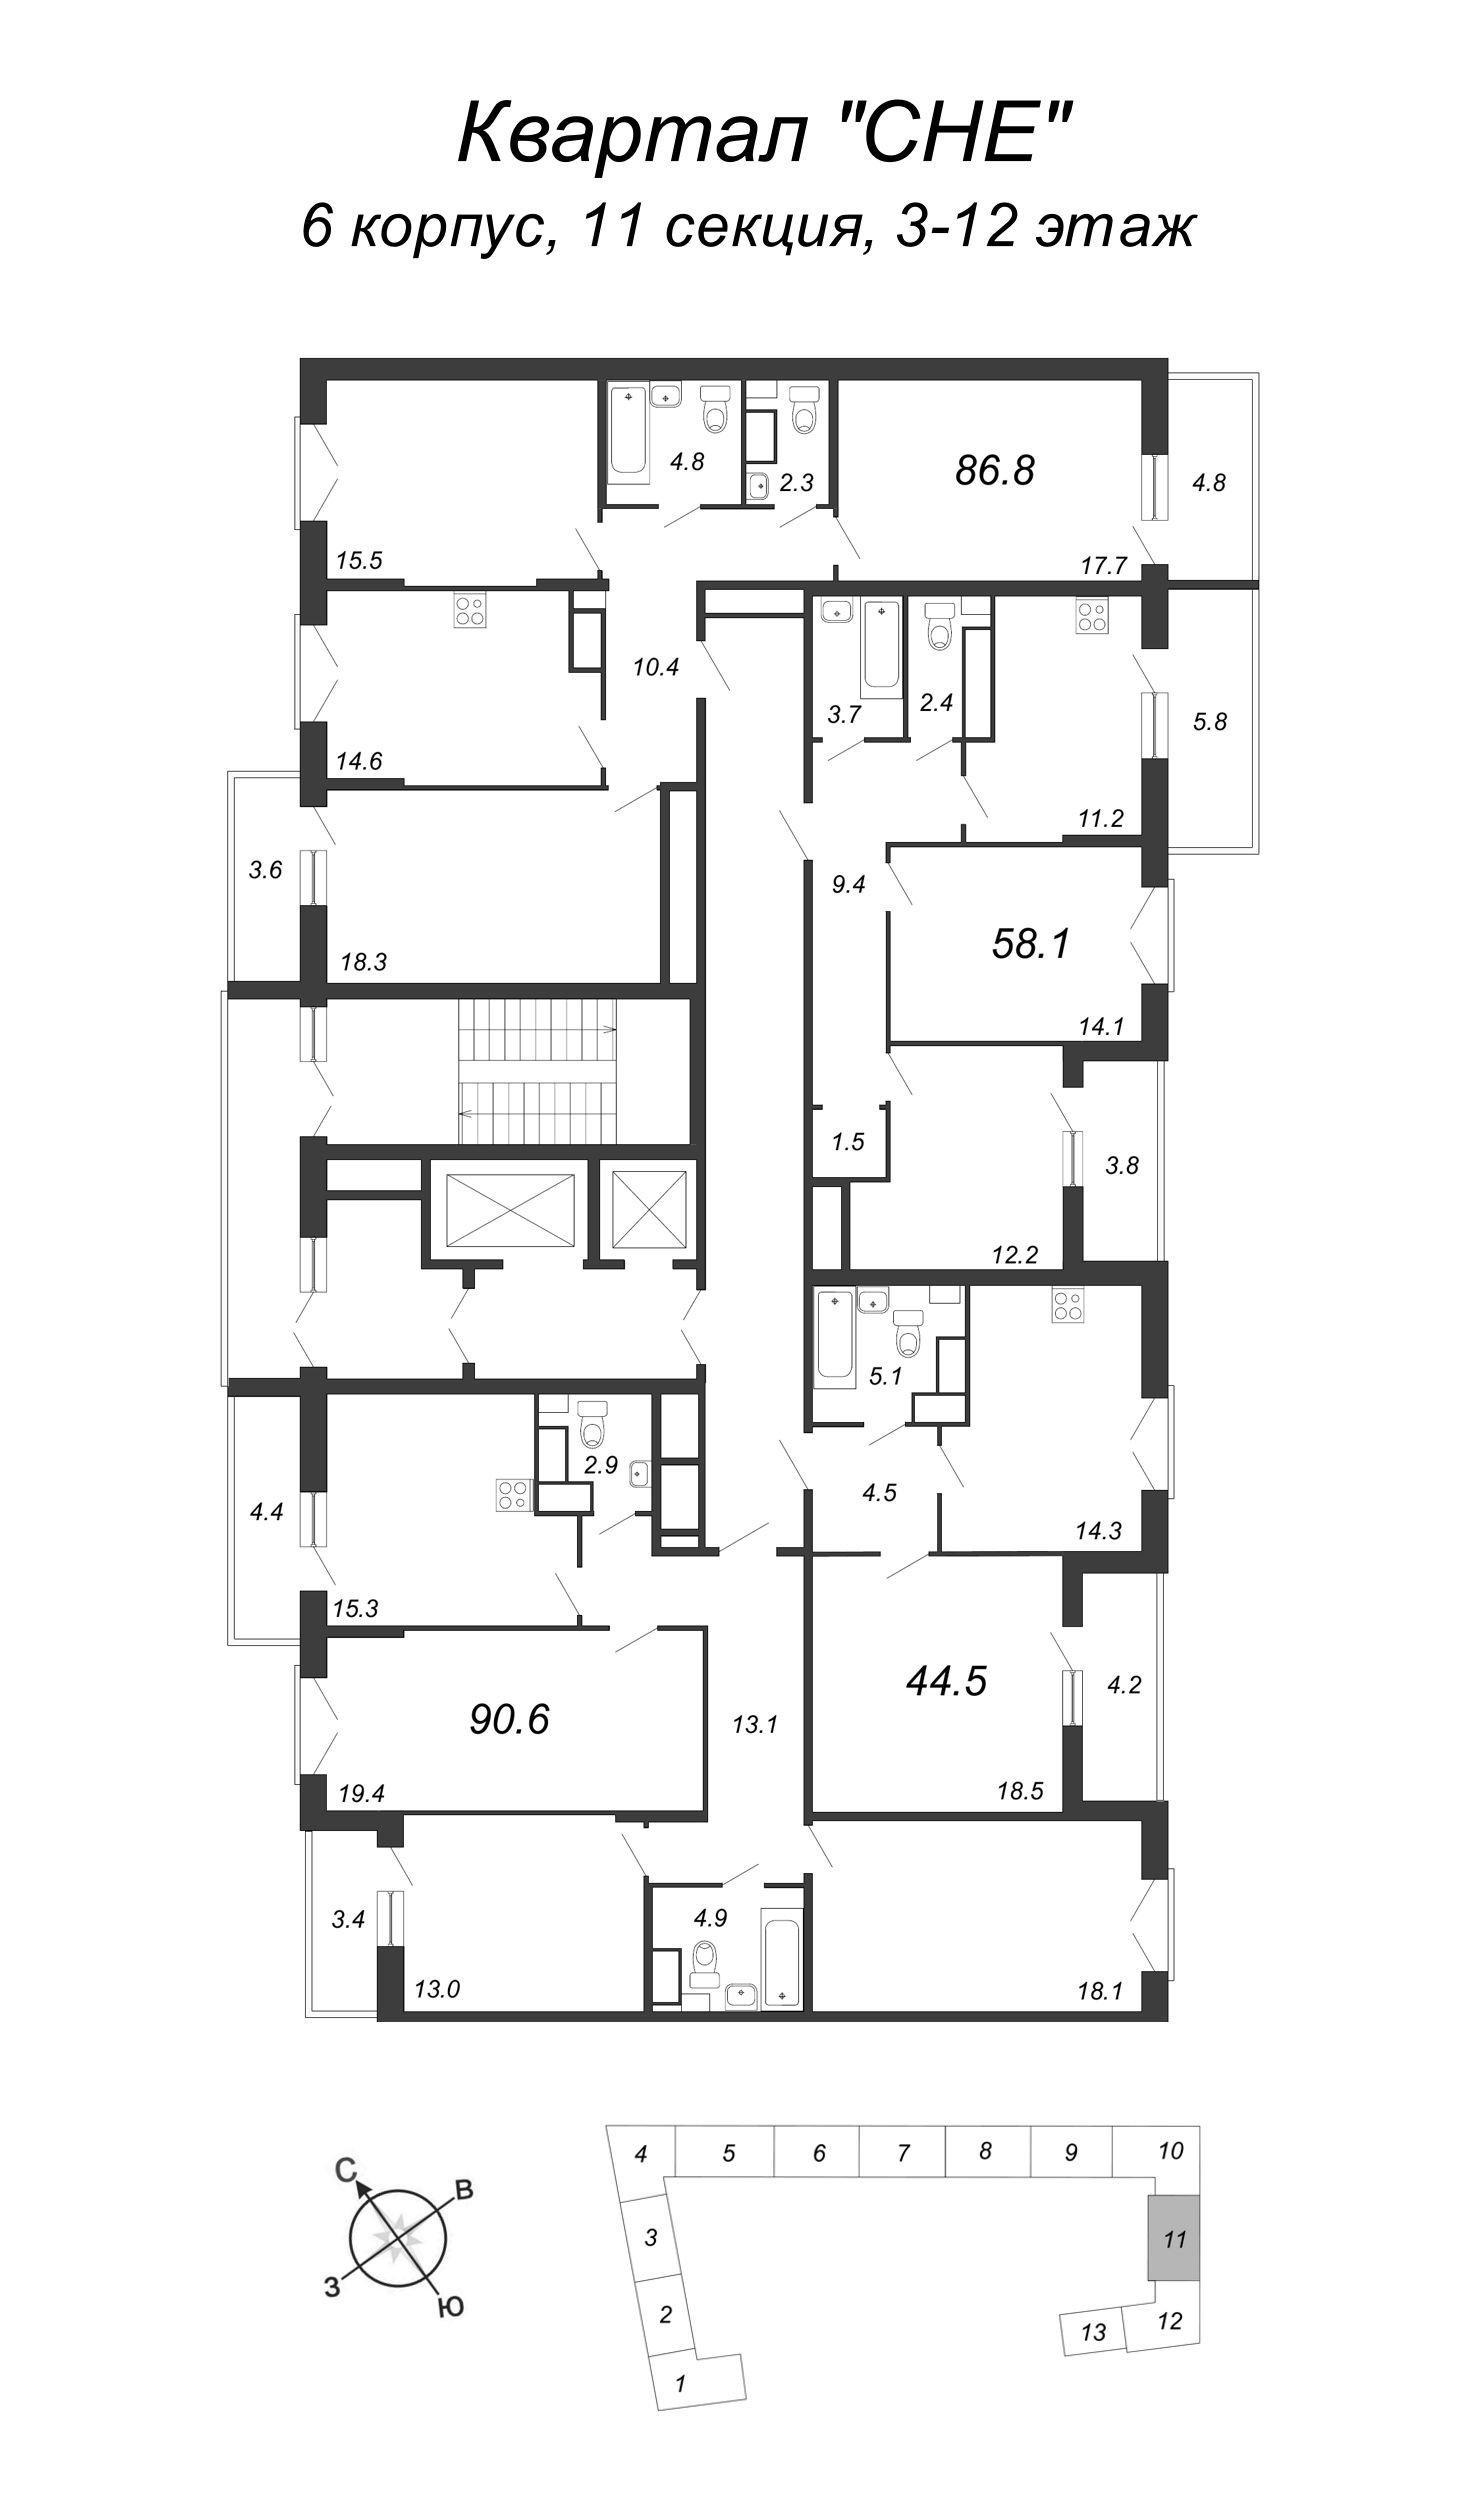 3-комнатная квартира, 92.4 м² в ЖК "Квартал Che" - планировка этажа